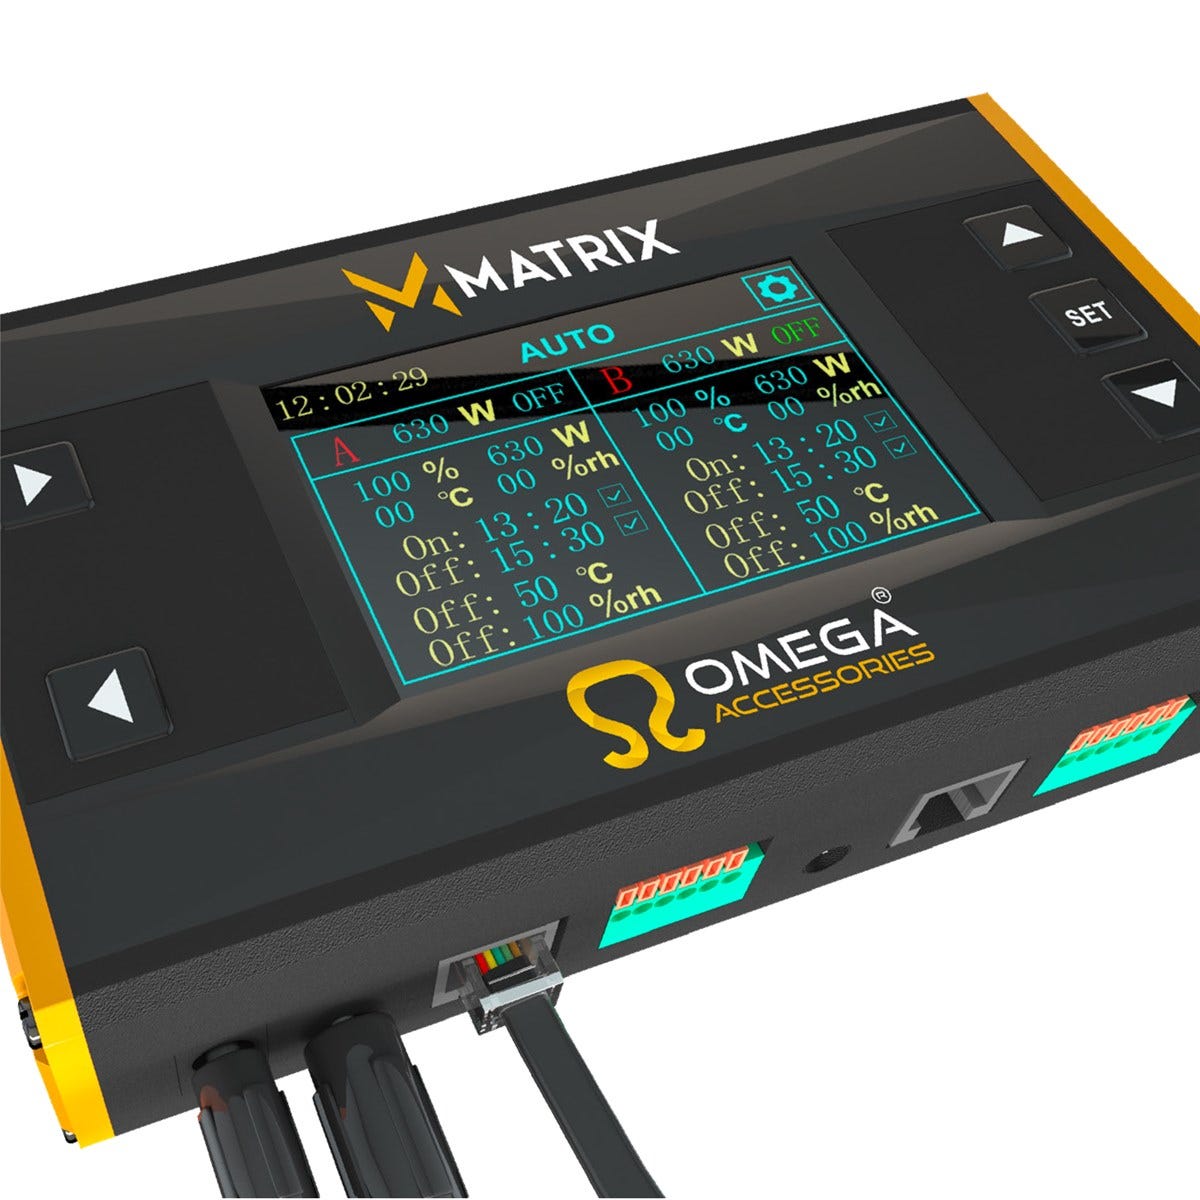 Omega Matrix Lighting Controller